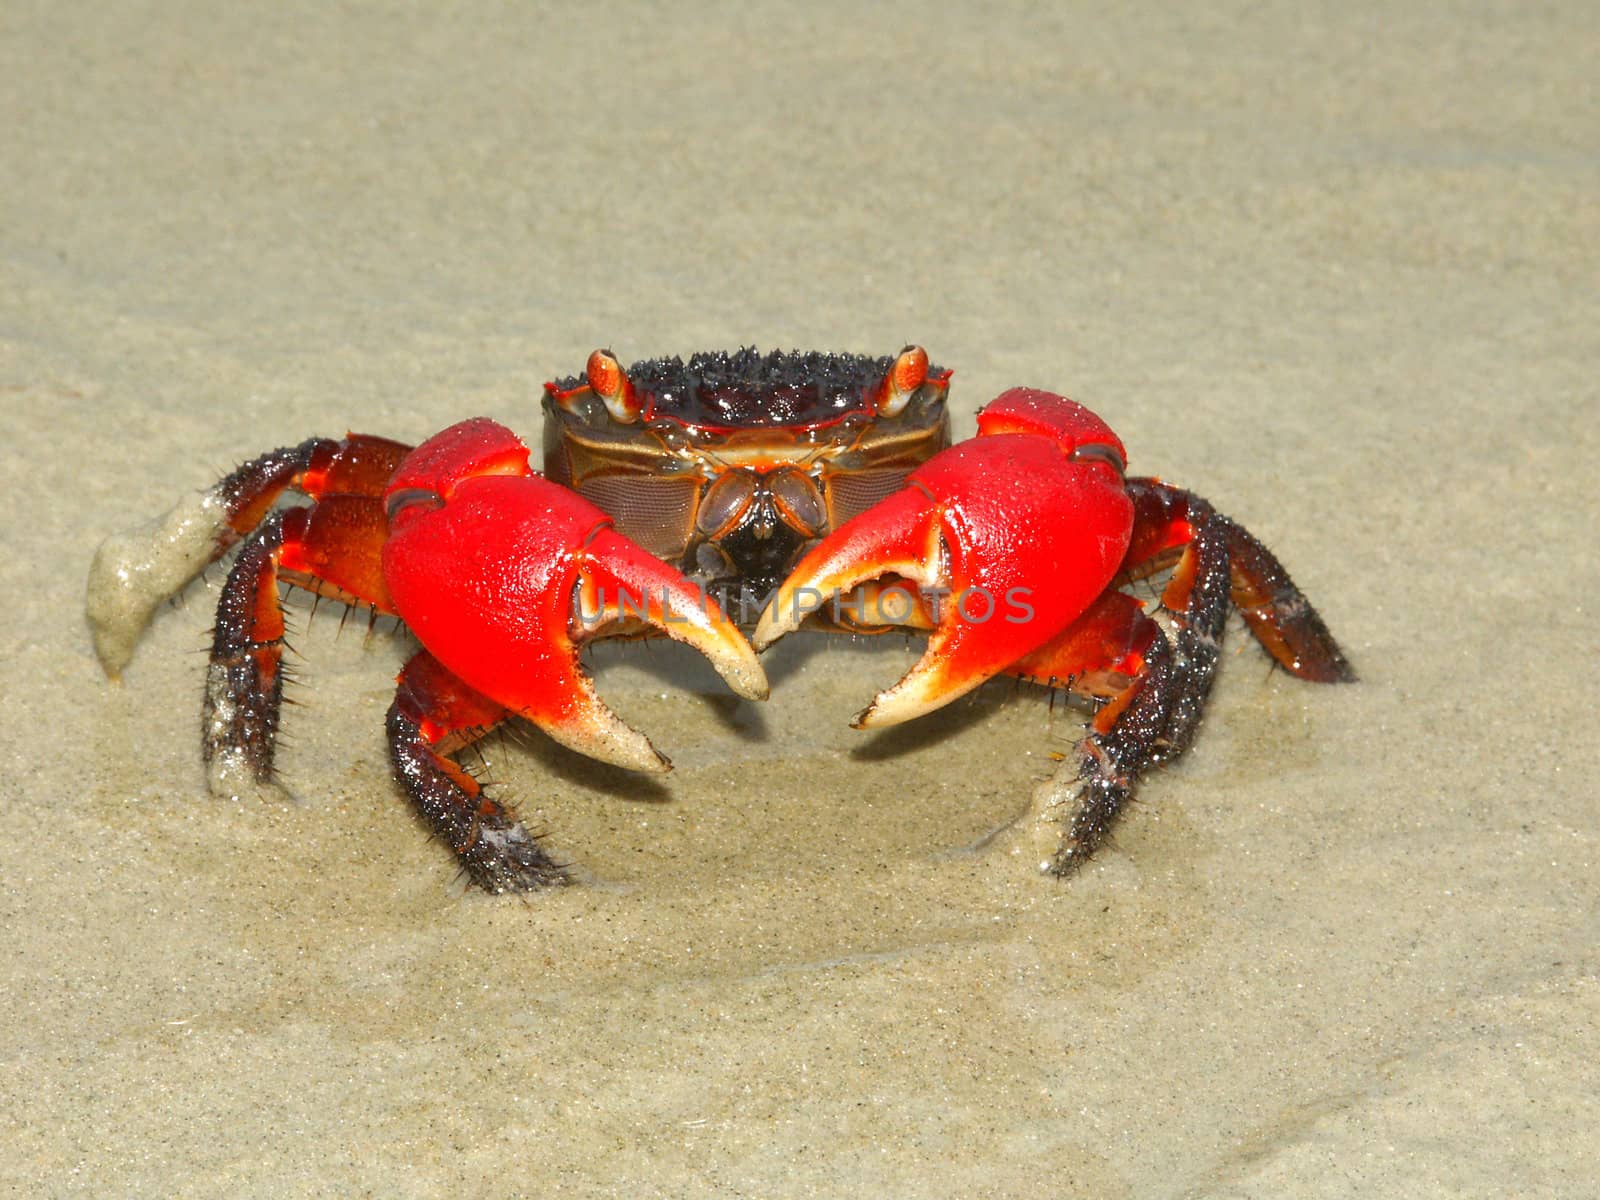 Mangrove Crab - Queensland, Australia by Wirepec